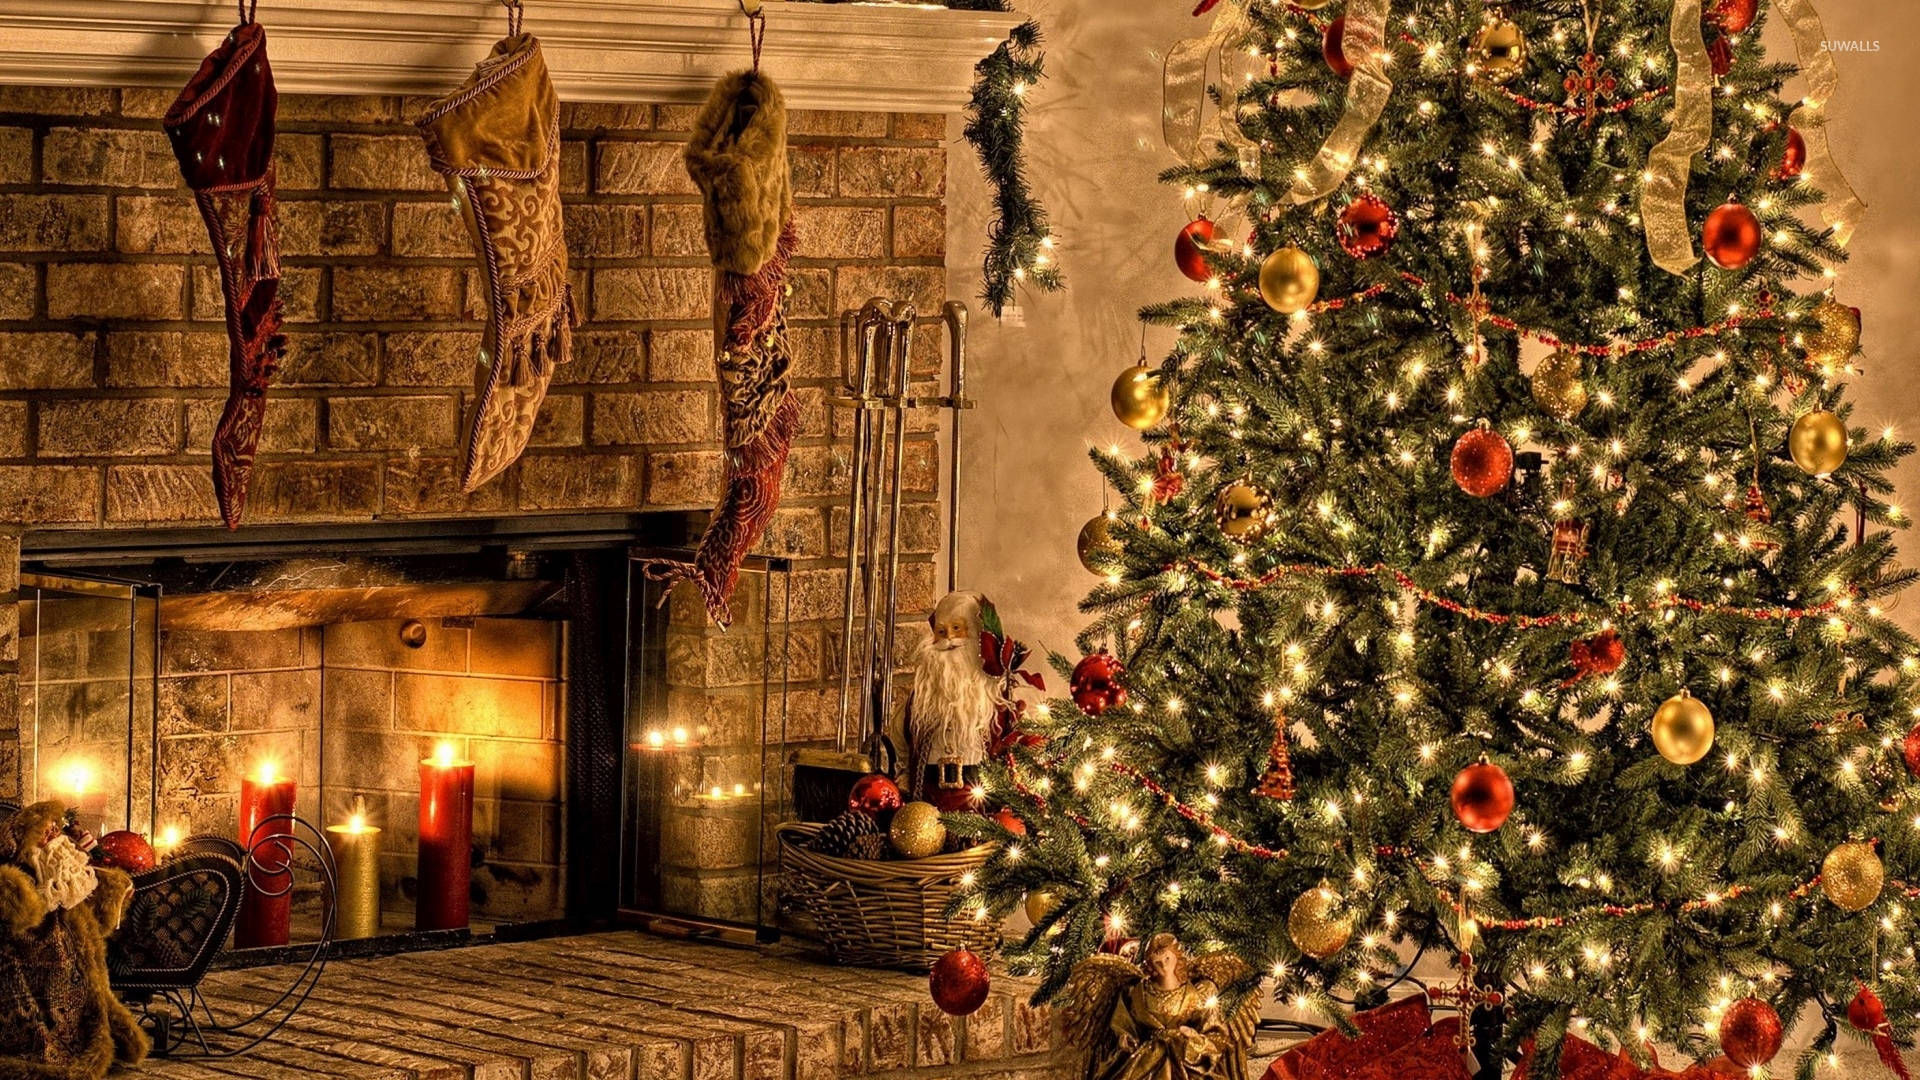 Cool Christmas Tree Scene With Fireplace Desktop Wallpaper